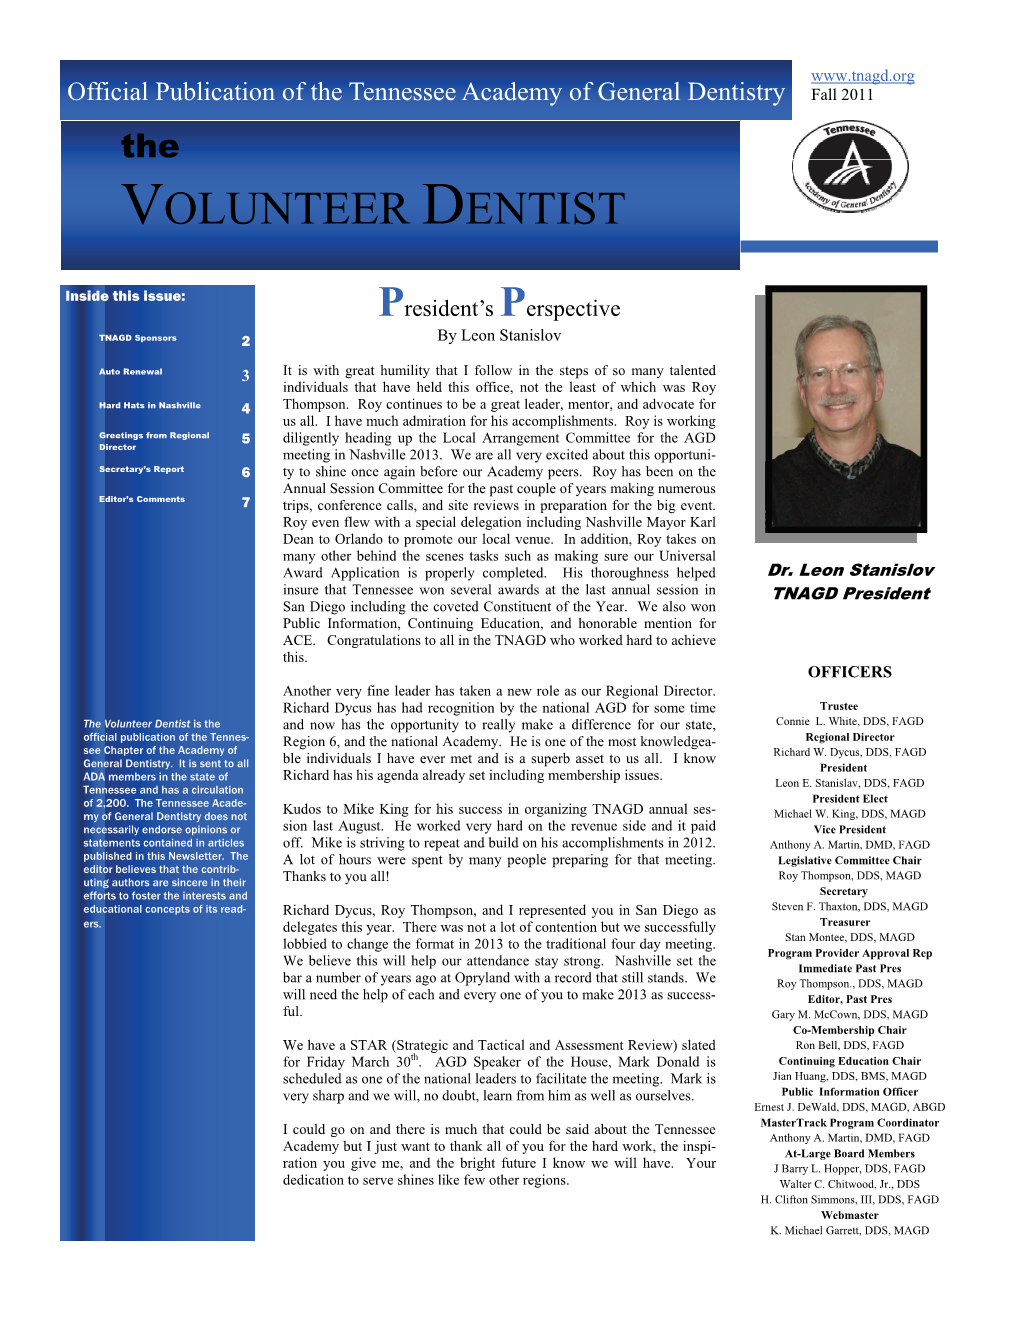 Volunteer Dentist